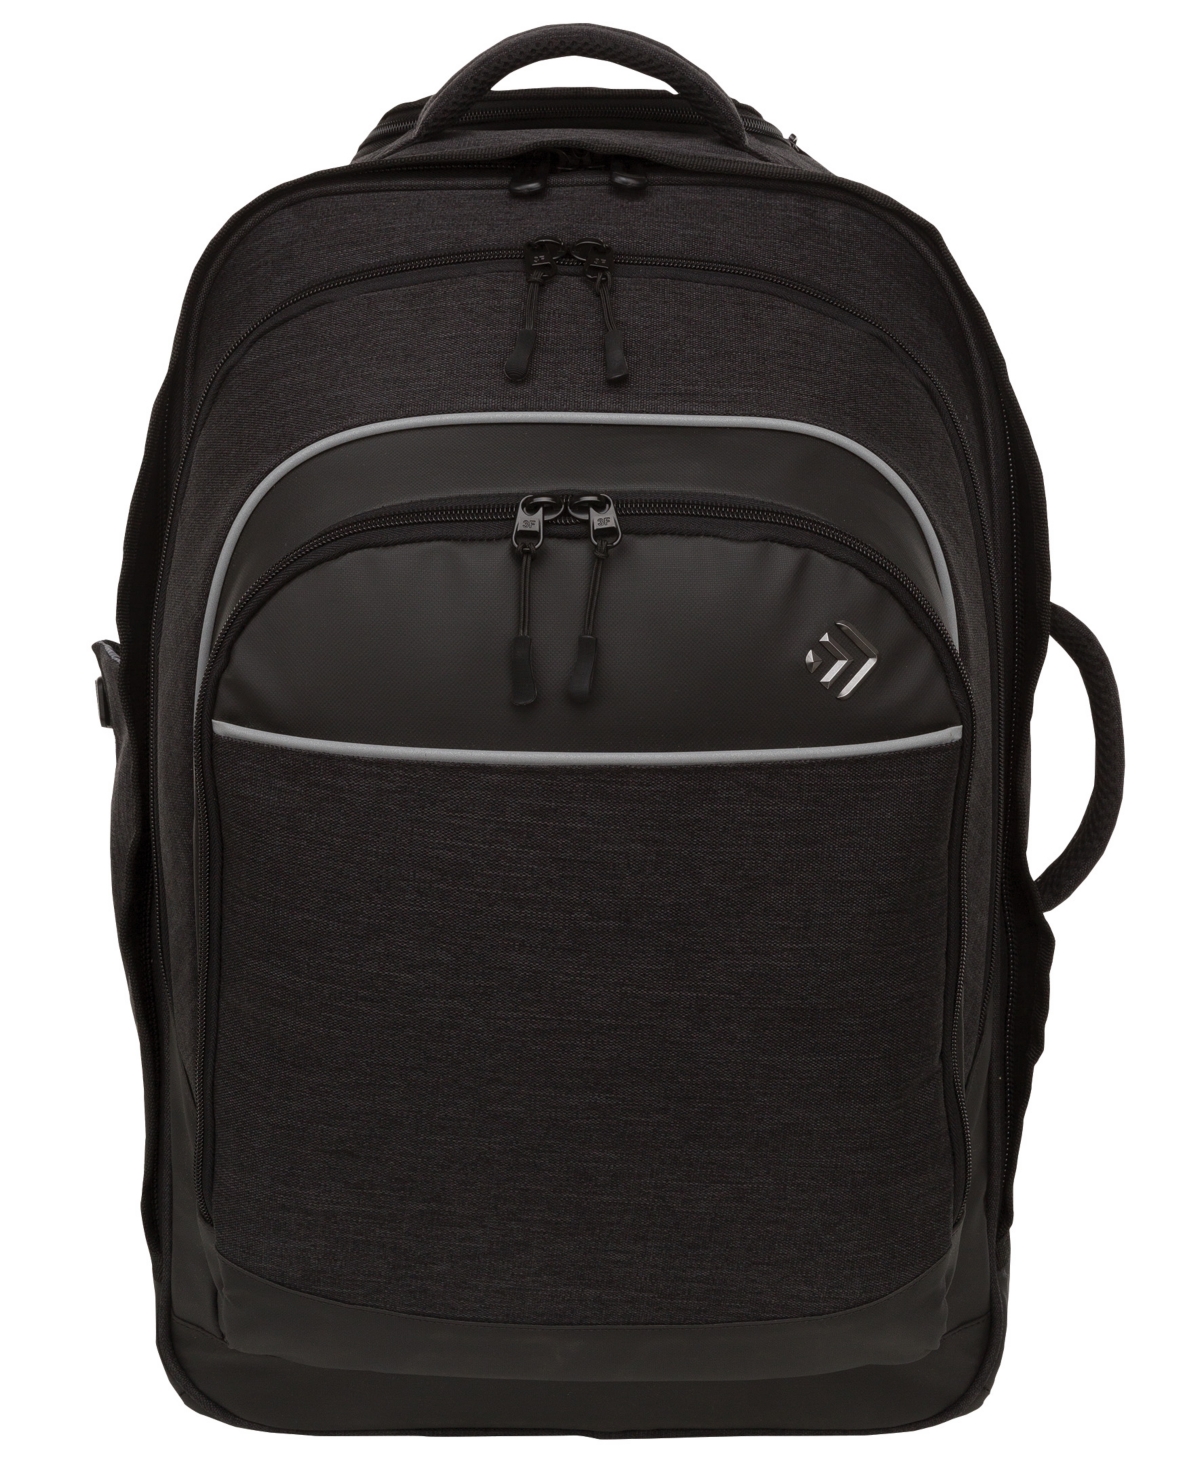 Voyager Rolling Backpack - Grey